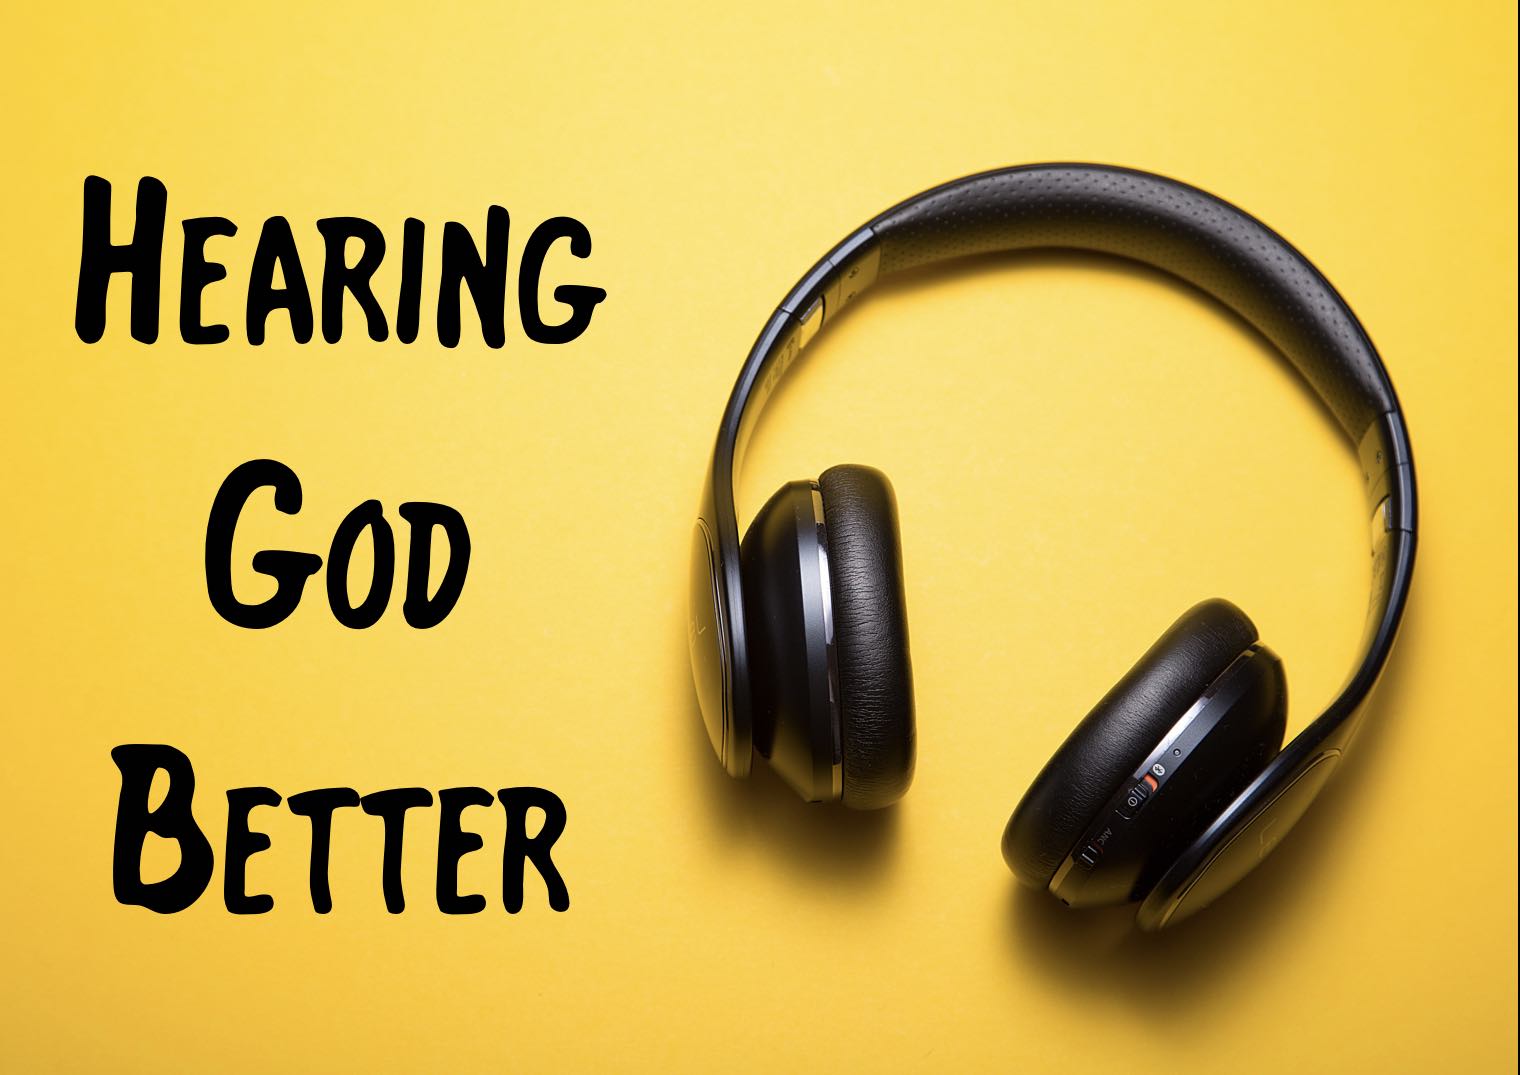 hearing god better small